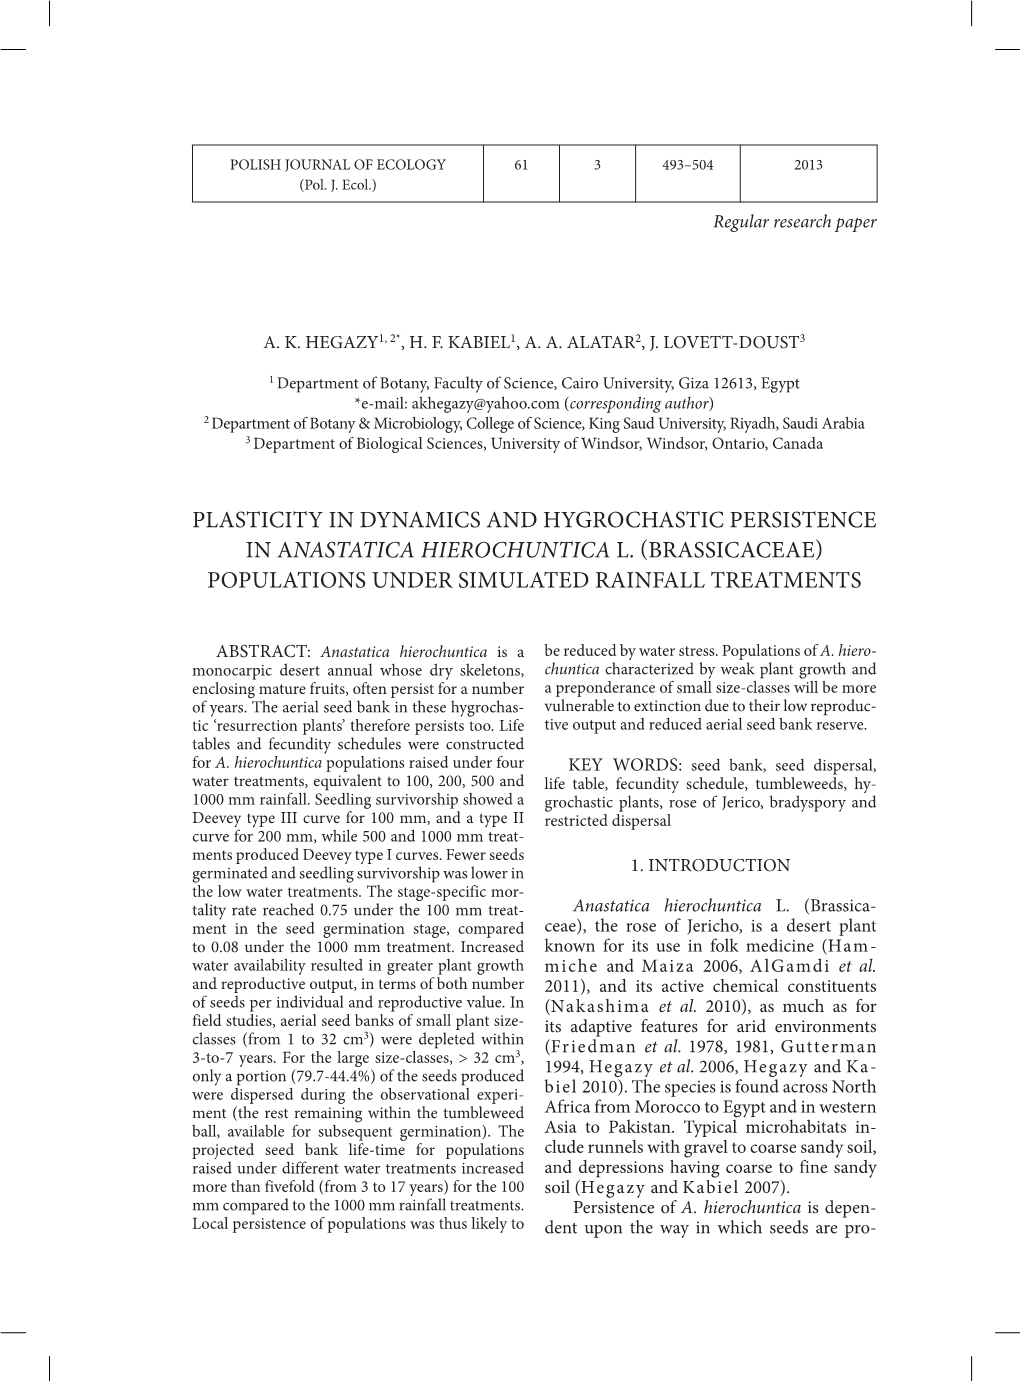 Plasticity in Dynamics and Hygrochastic Persistence in Anastatica Hierochuntica L